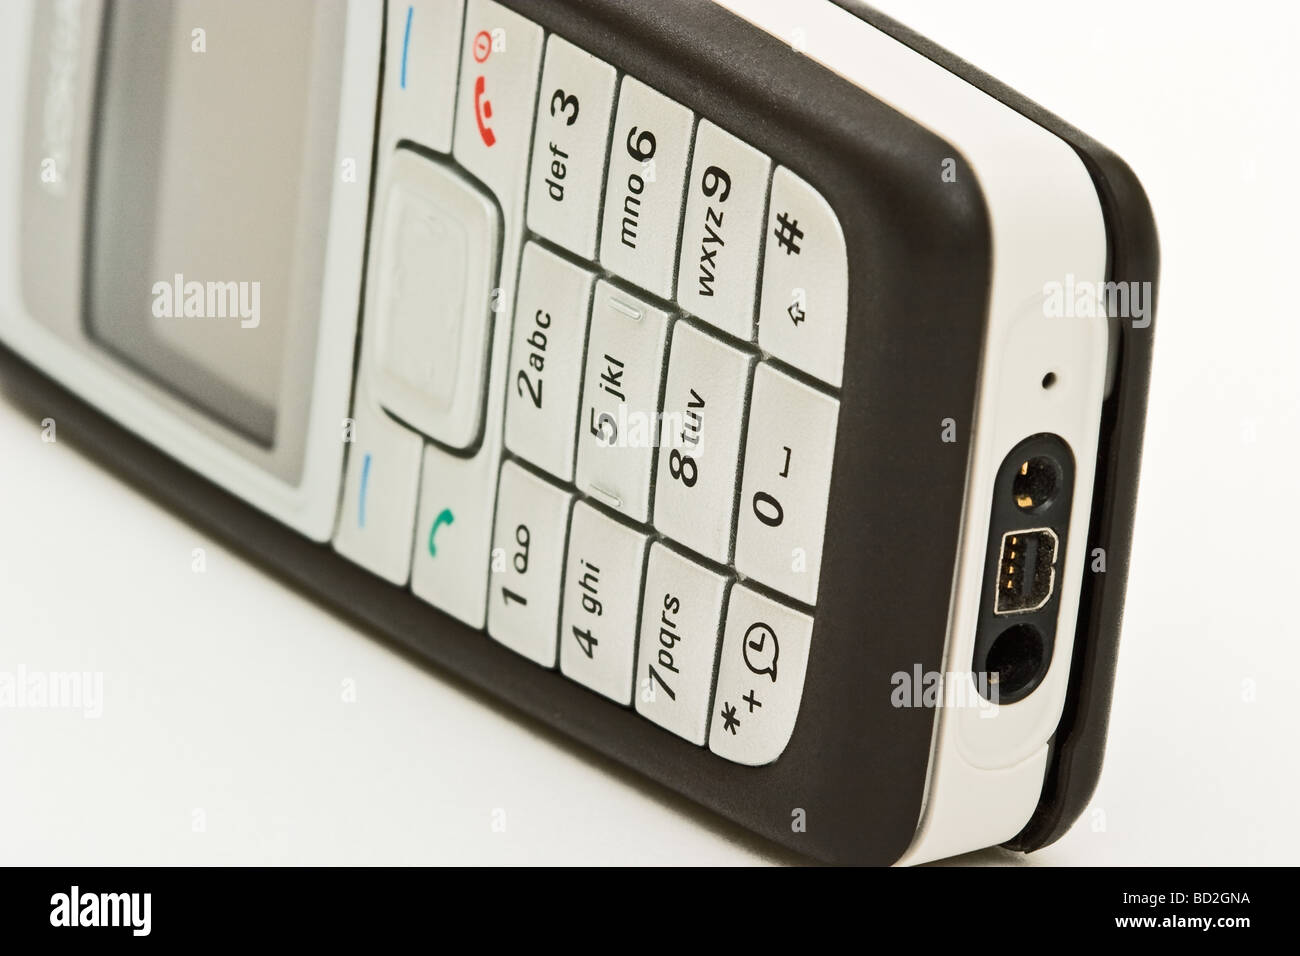 Alte telefontastatur -Fotos und -Bildmaterial in hoher Auflösung – Alamy